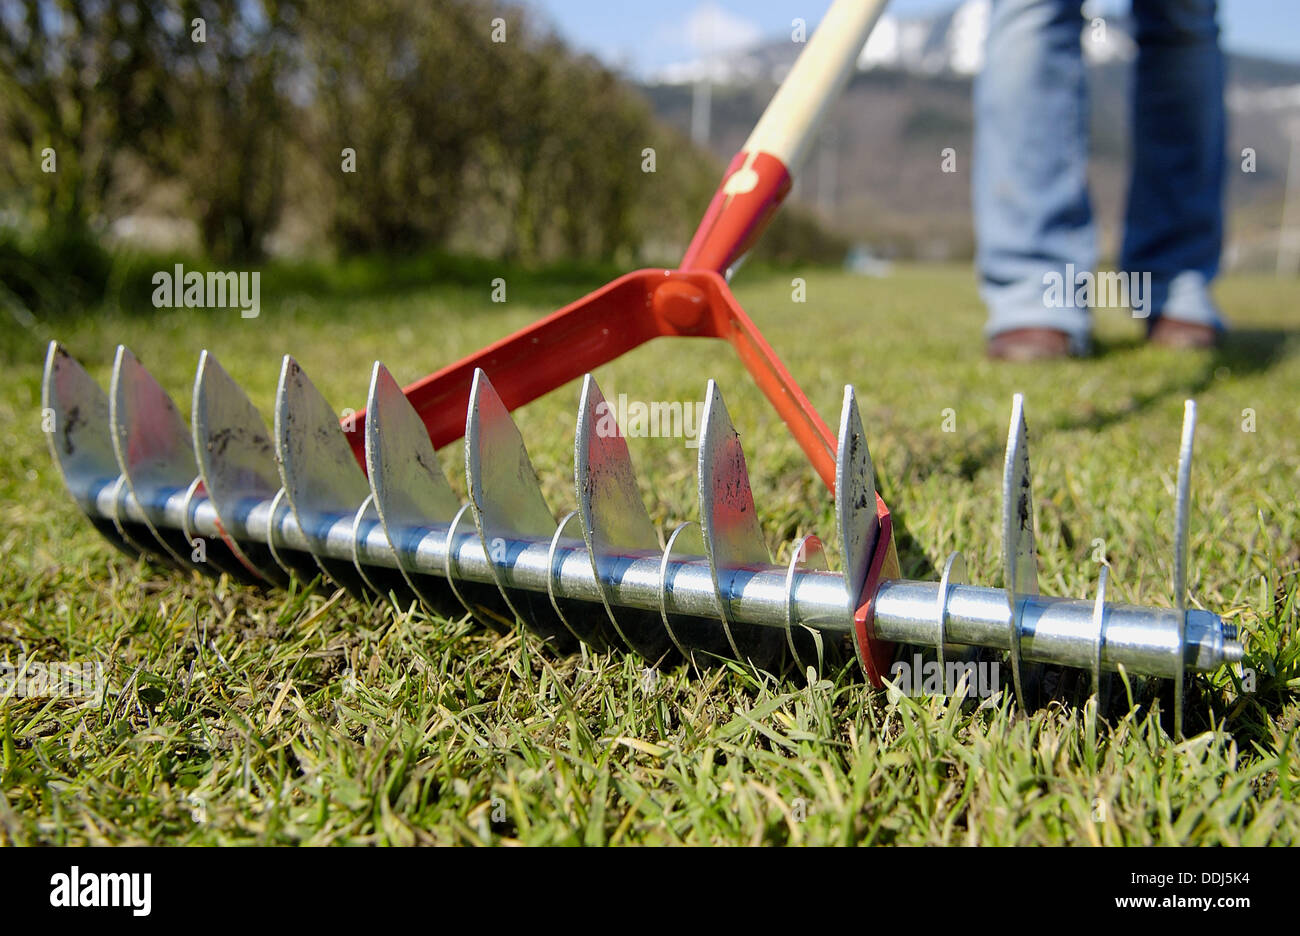 Scarifier, garden tool used to break up soil Stock Photo - Alamy